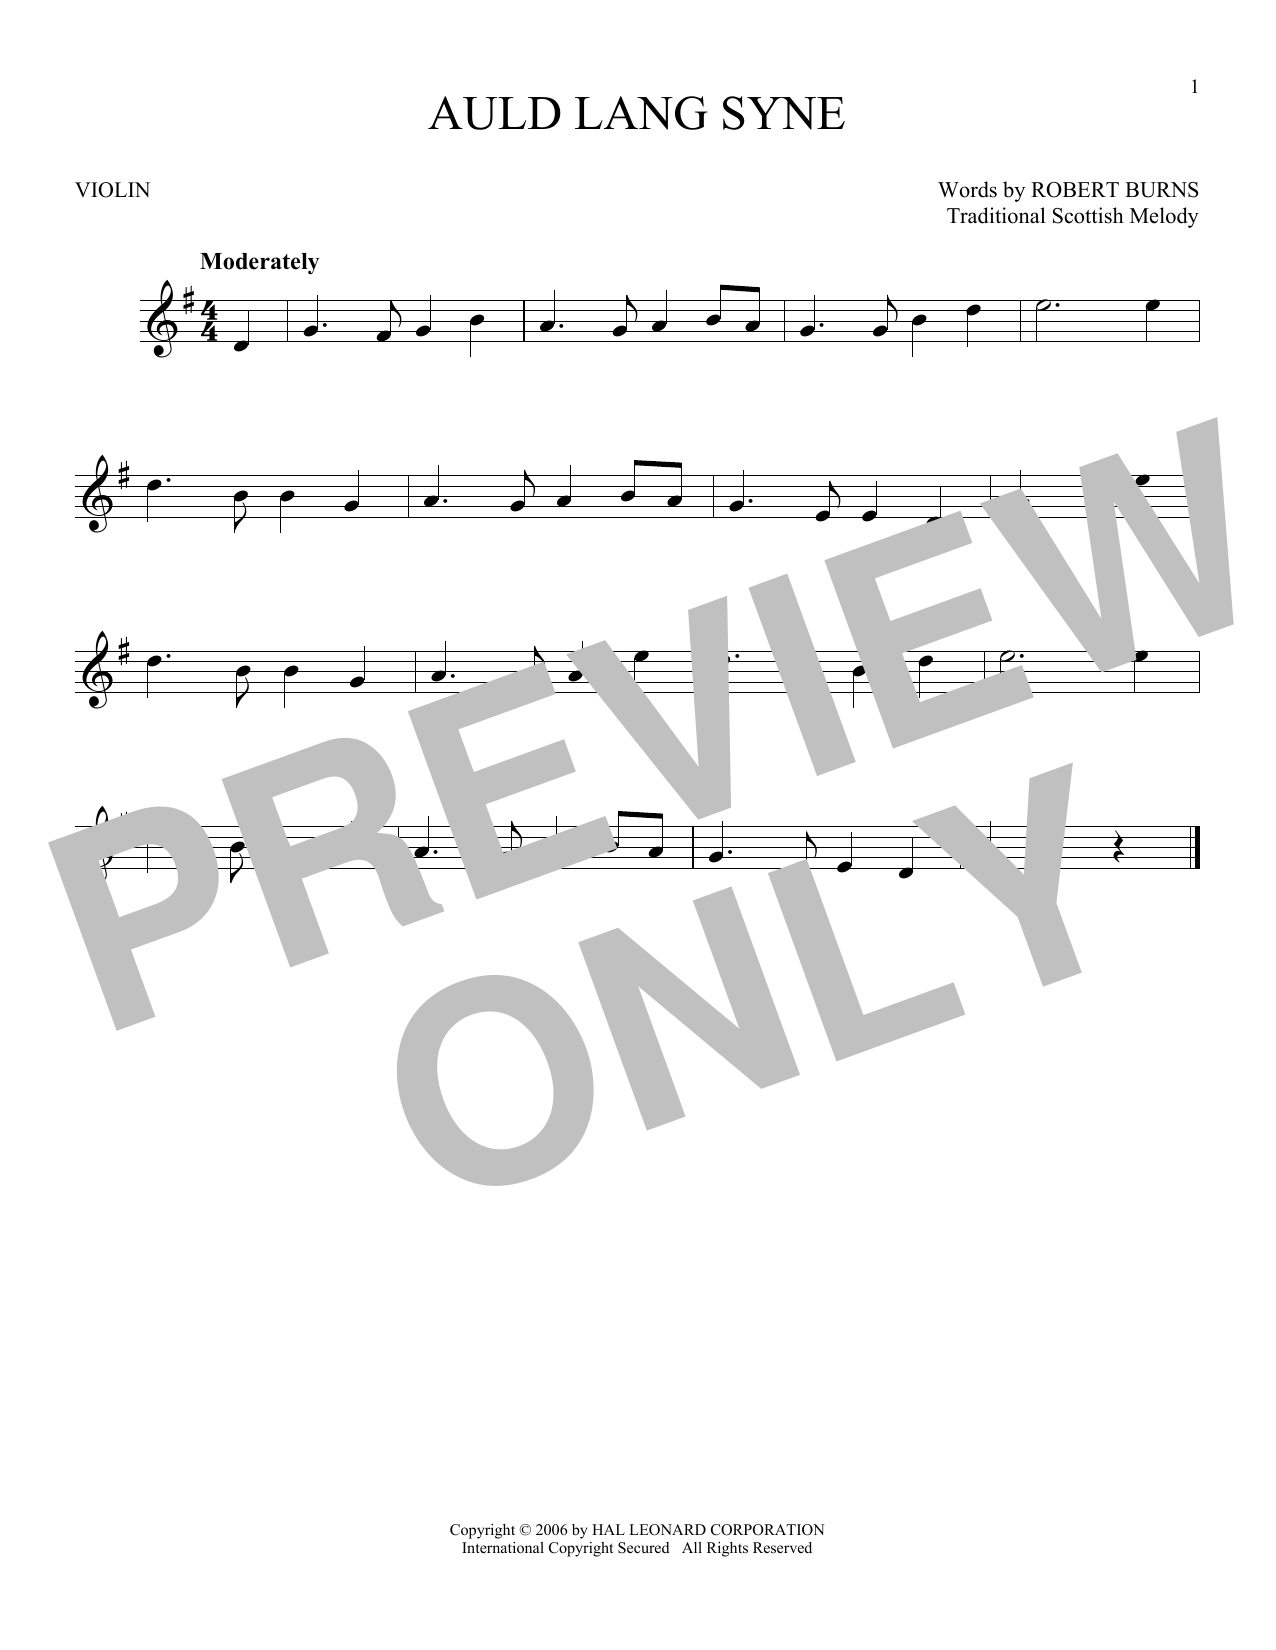 Traditional Scottish Melody Auld Lang Syne Sheet Music Notes & Chords for Baritone Ukulele - Download or Print PDF